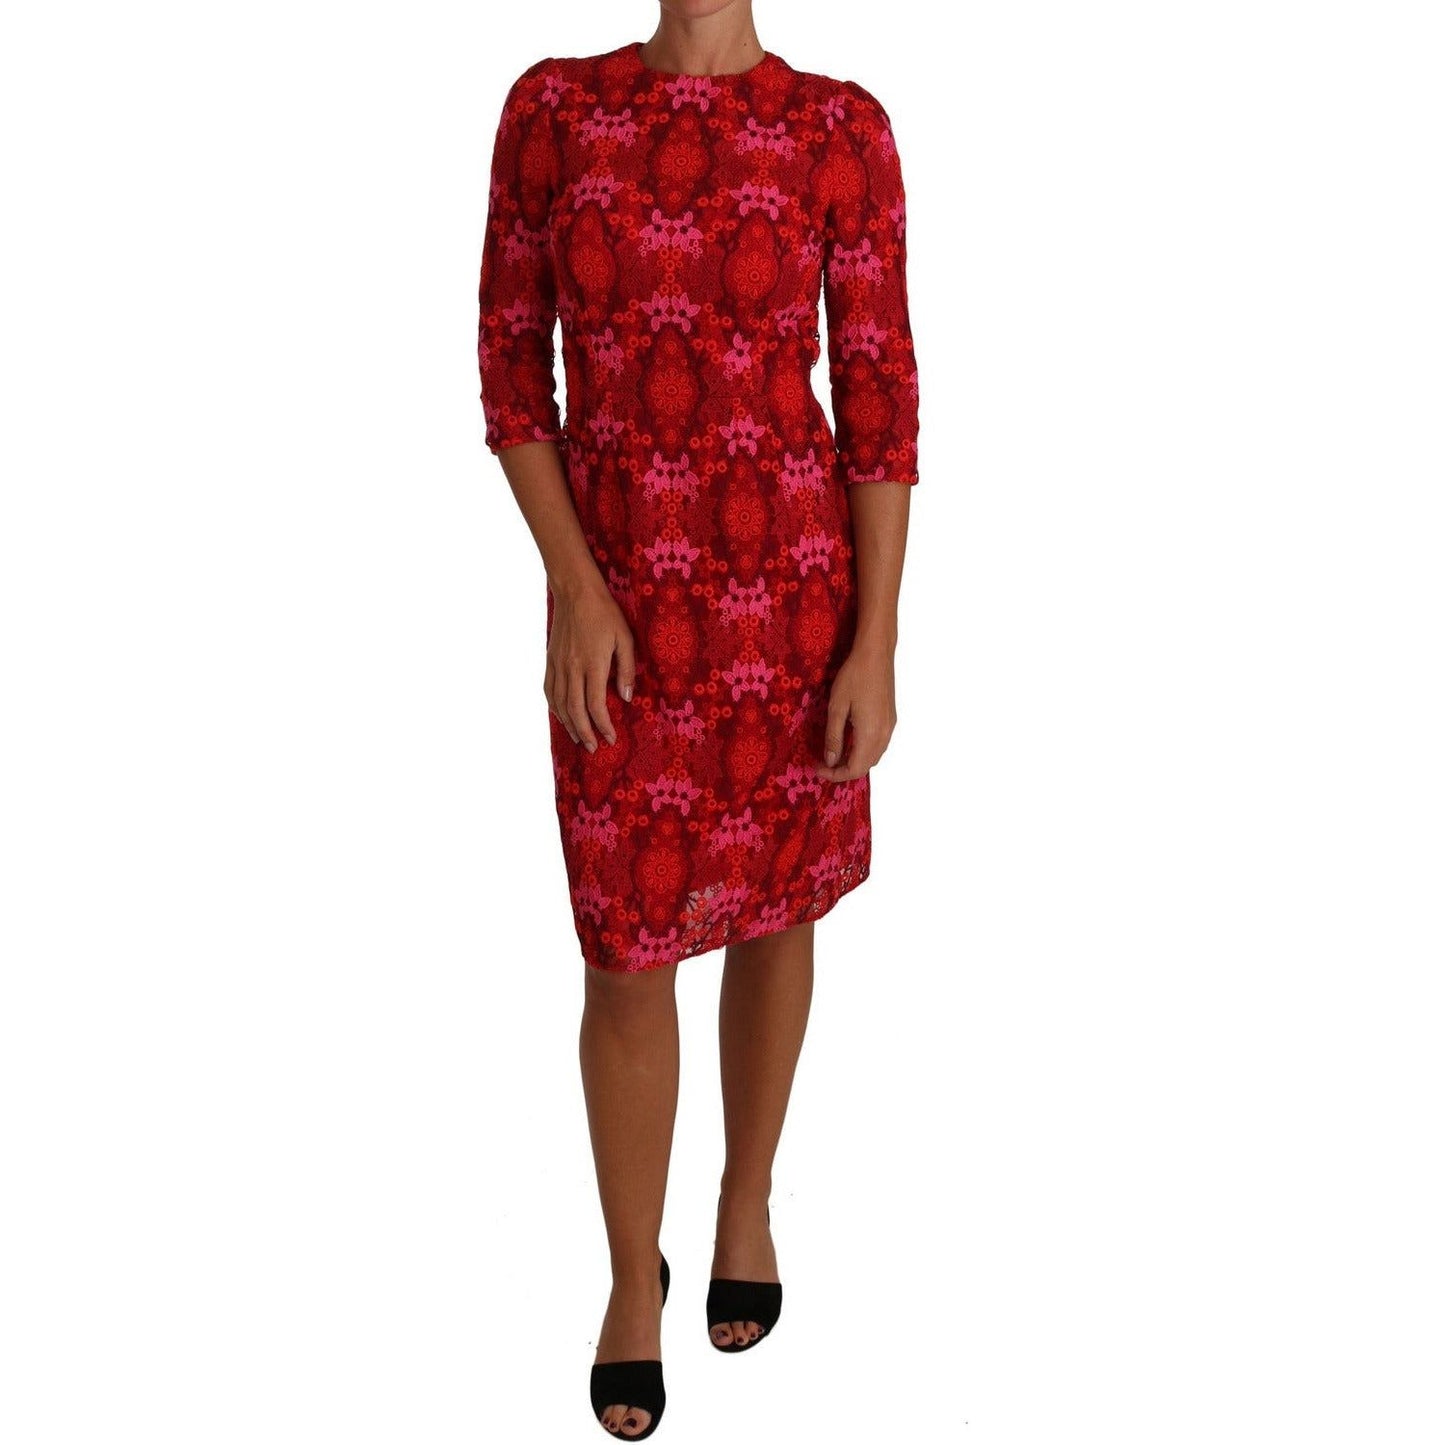 Dolce & Gabbana Elegant Floral Crochet Knee-Length Dress floral-crochet-lace-red-pink-sheath-dress 635562-floral-crochet-lace-red-pink-sheath-dress.jpg